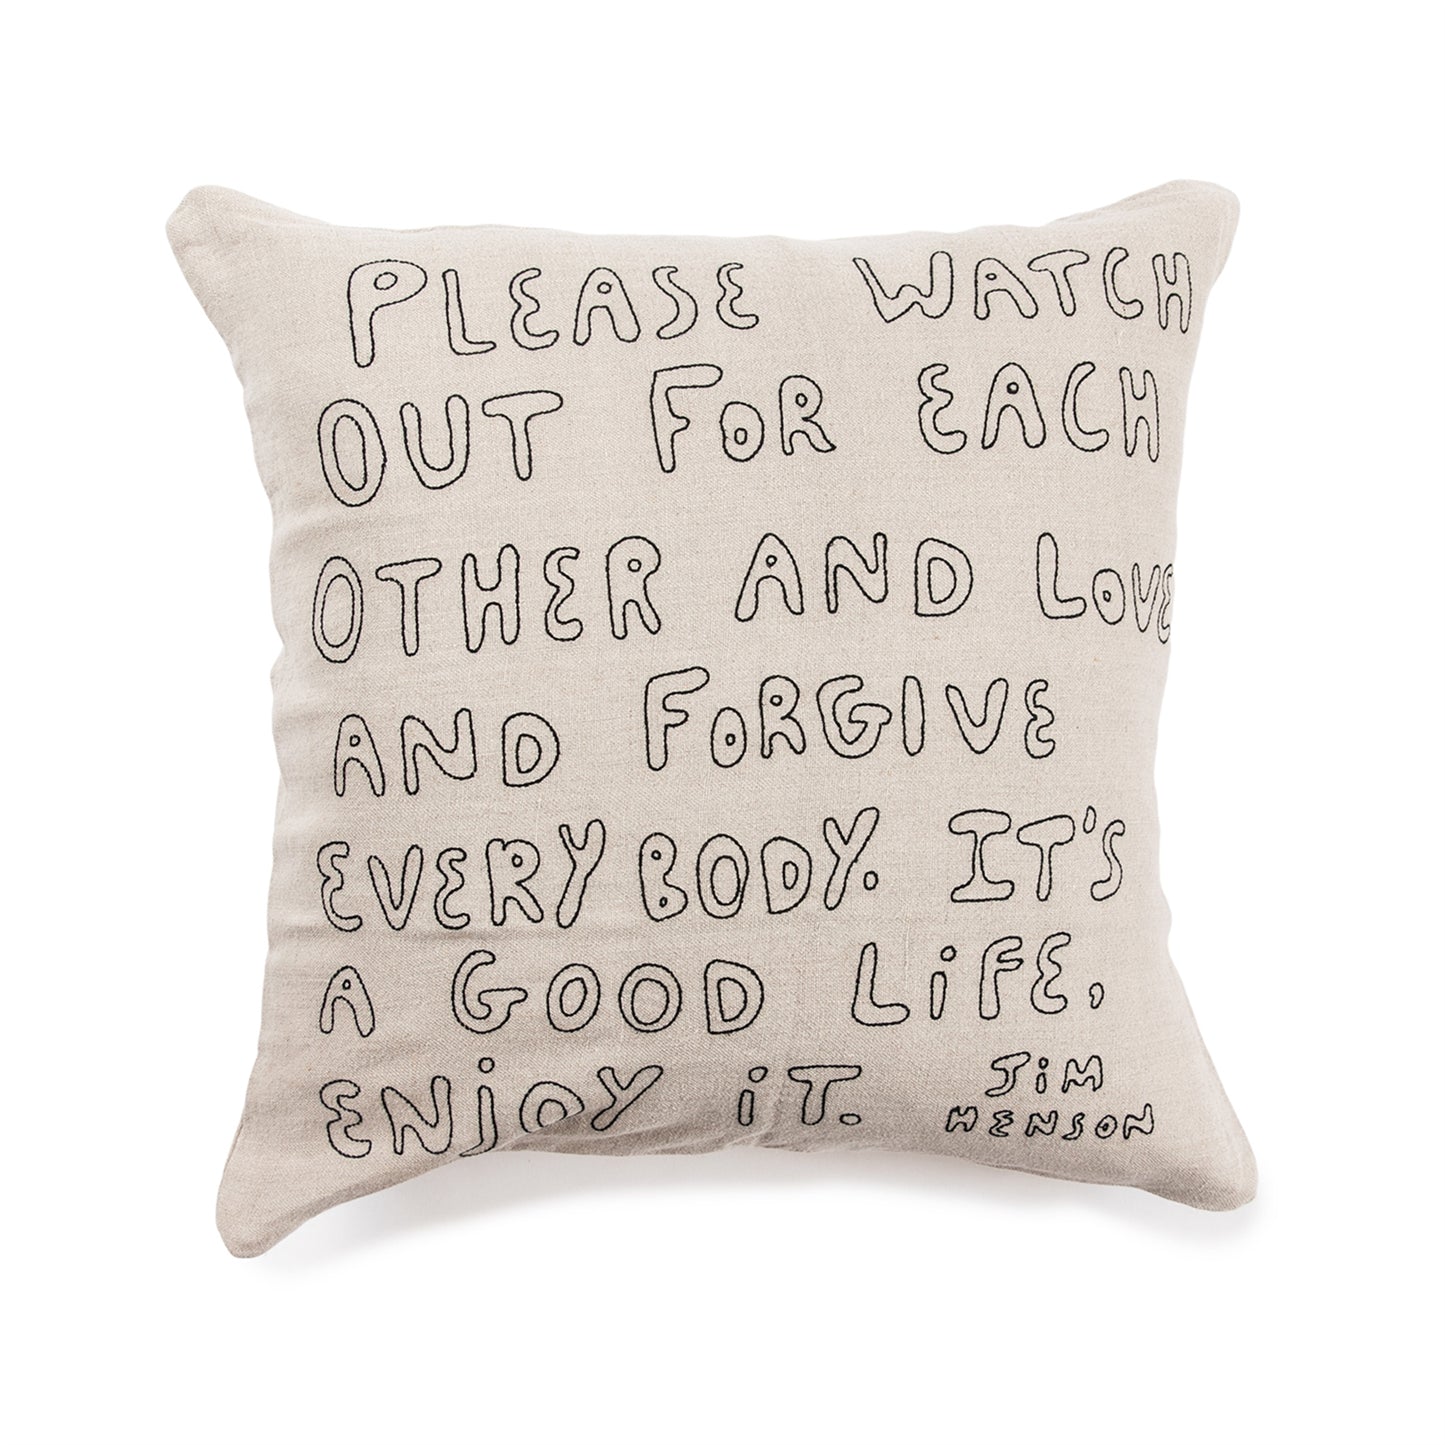 Jim Henson Embroidery Pillow